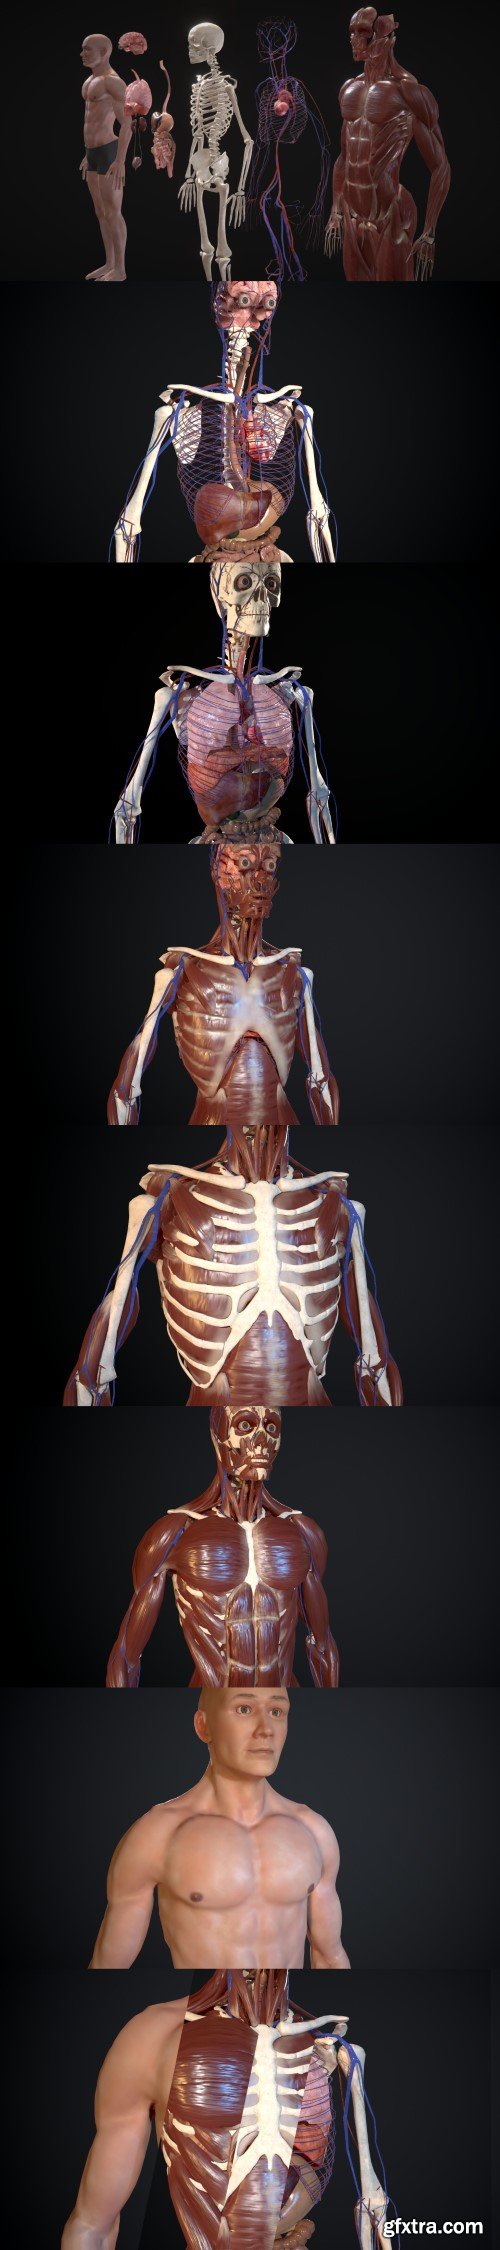 Animated Full Human Body Anatomy